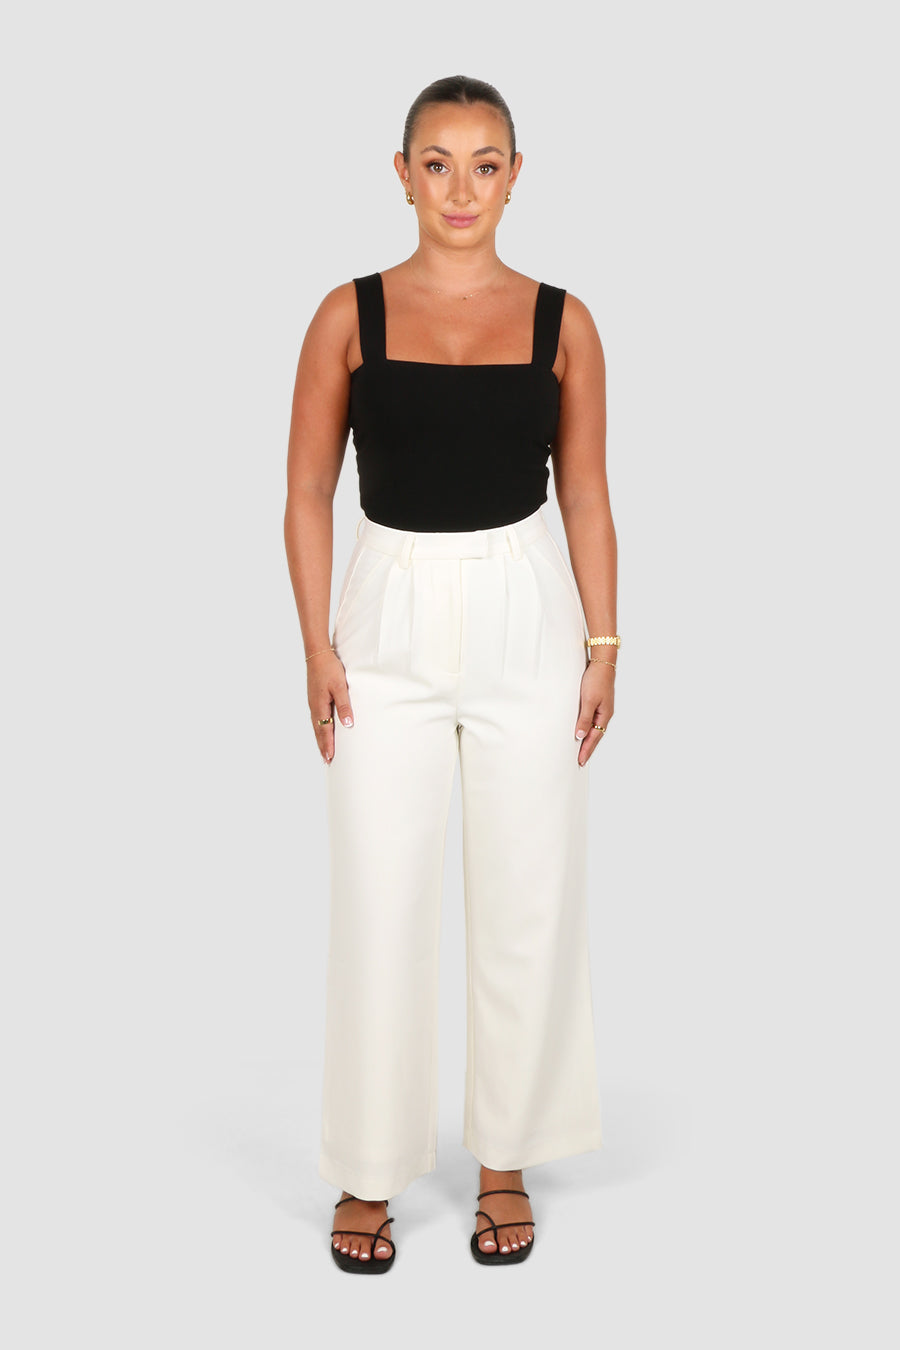 White Pants For Women - Buy White Pants For Women online at Best Prices in  India | Flipkart.com